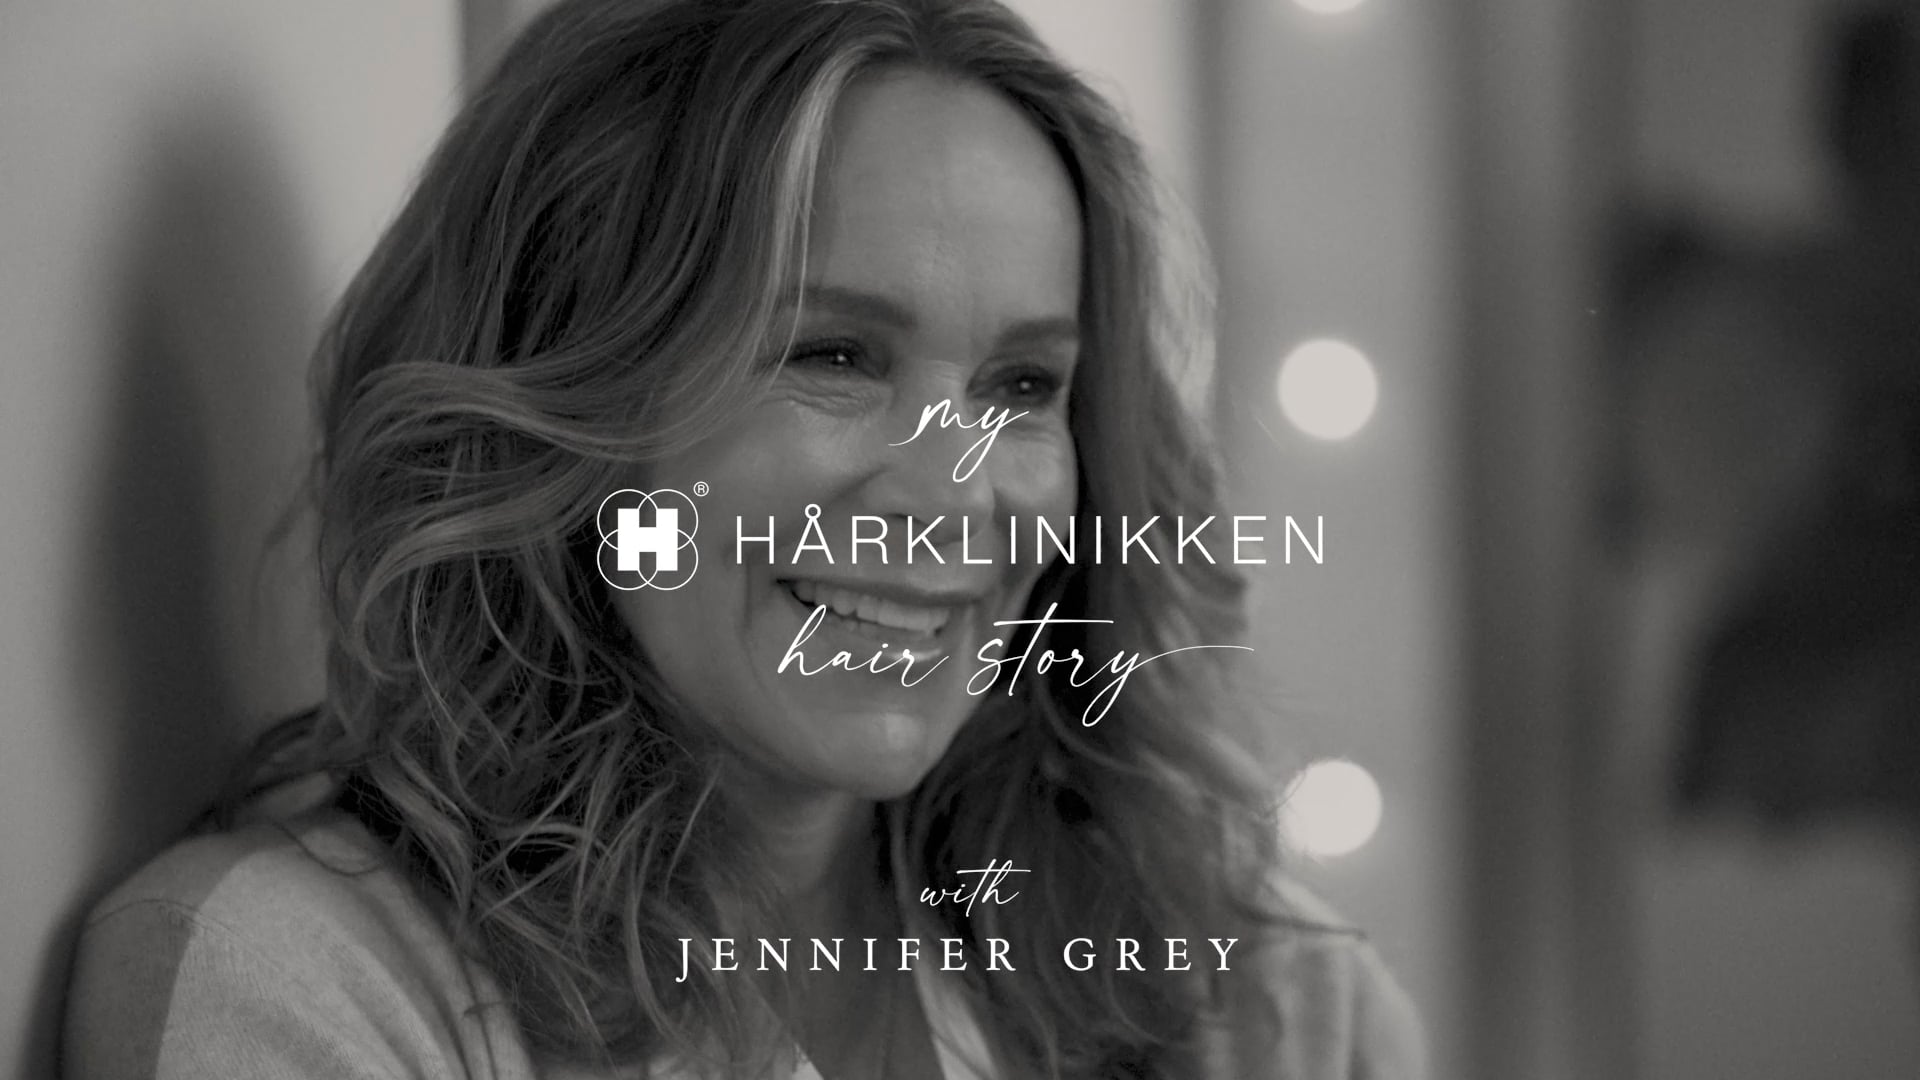 My Harklinikken Hair Story with Jennifer Grey Poster